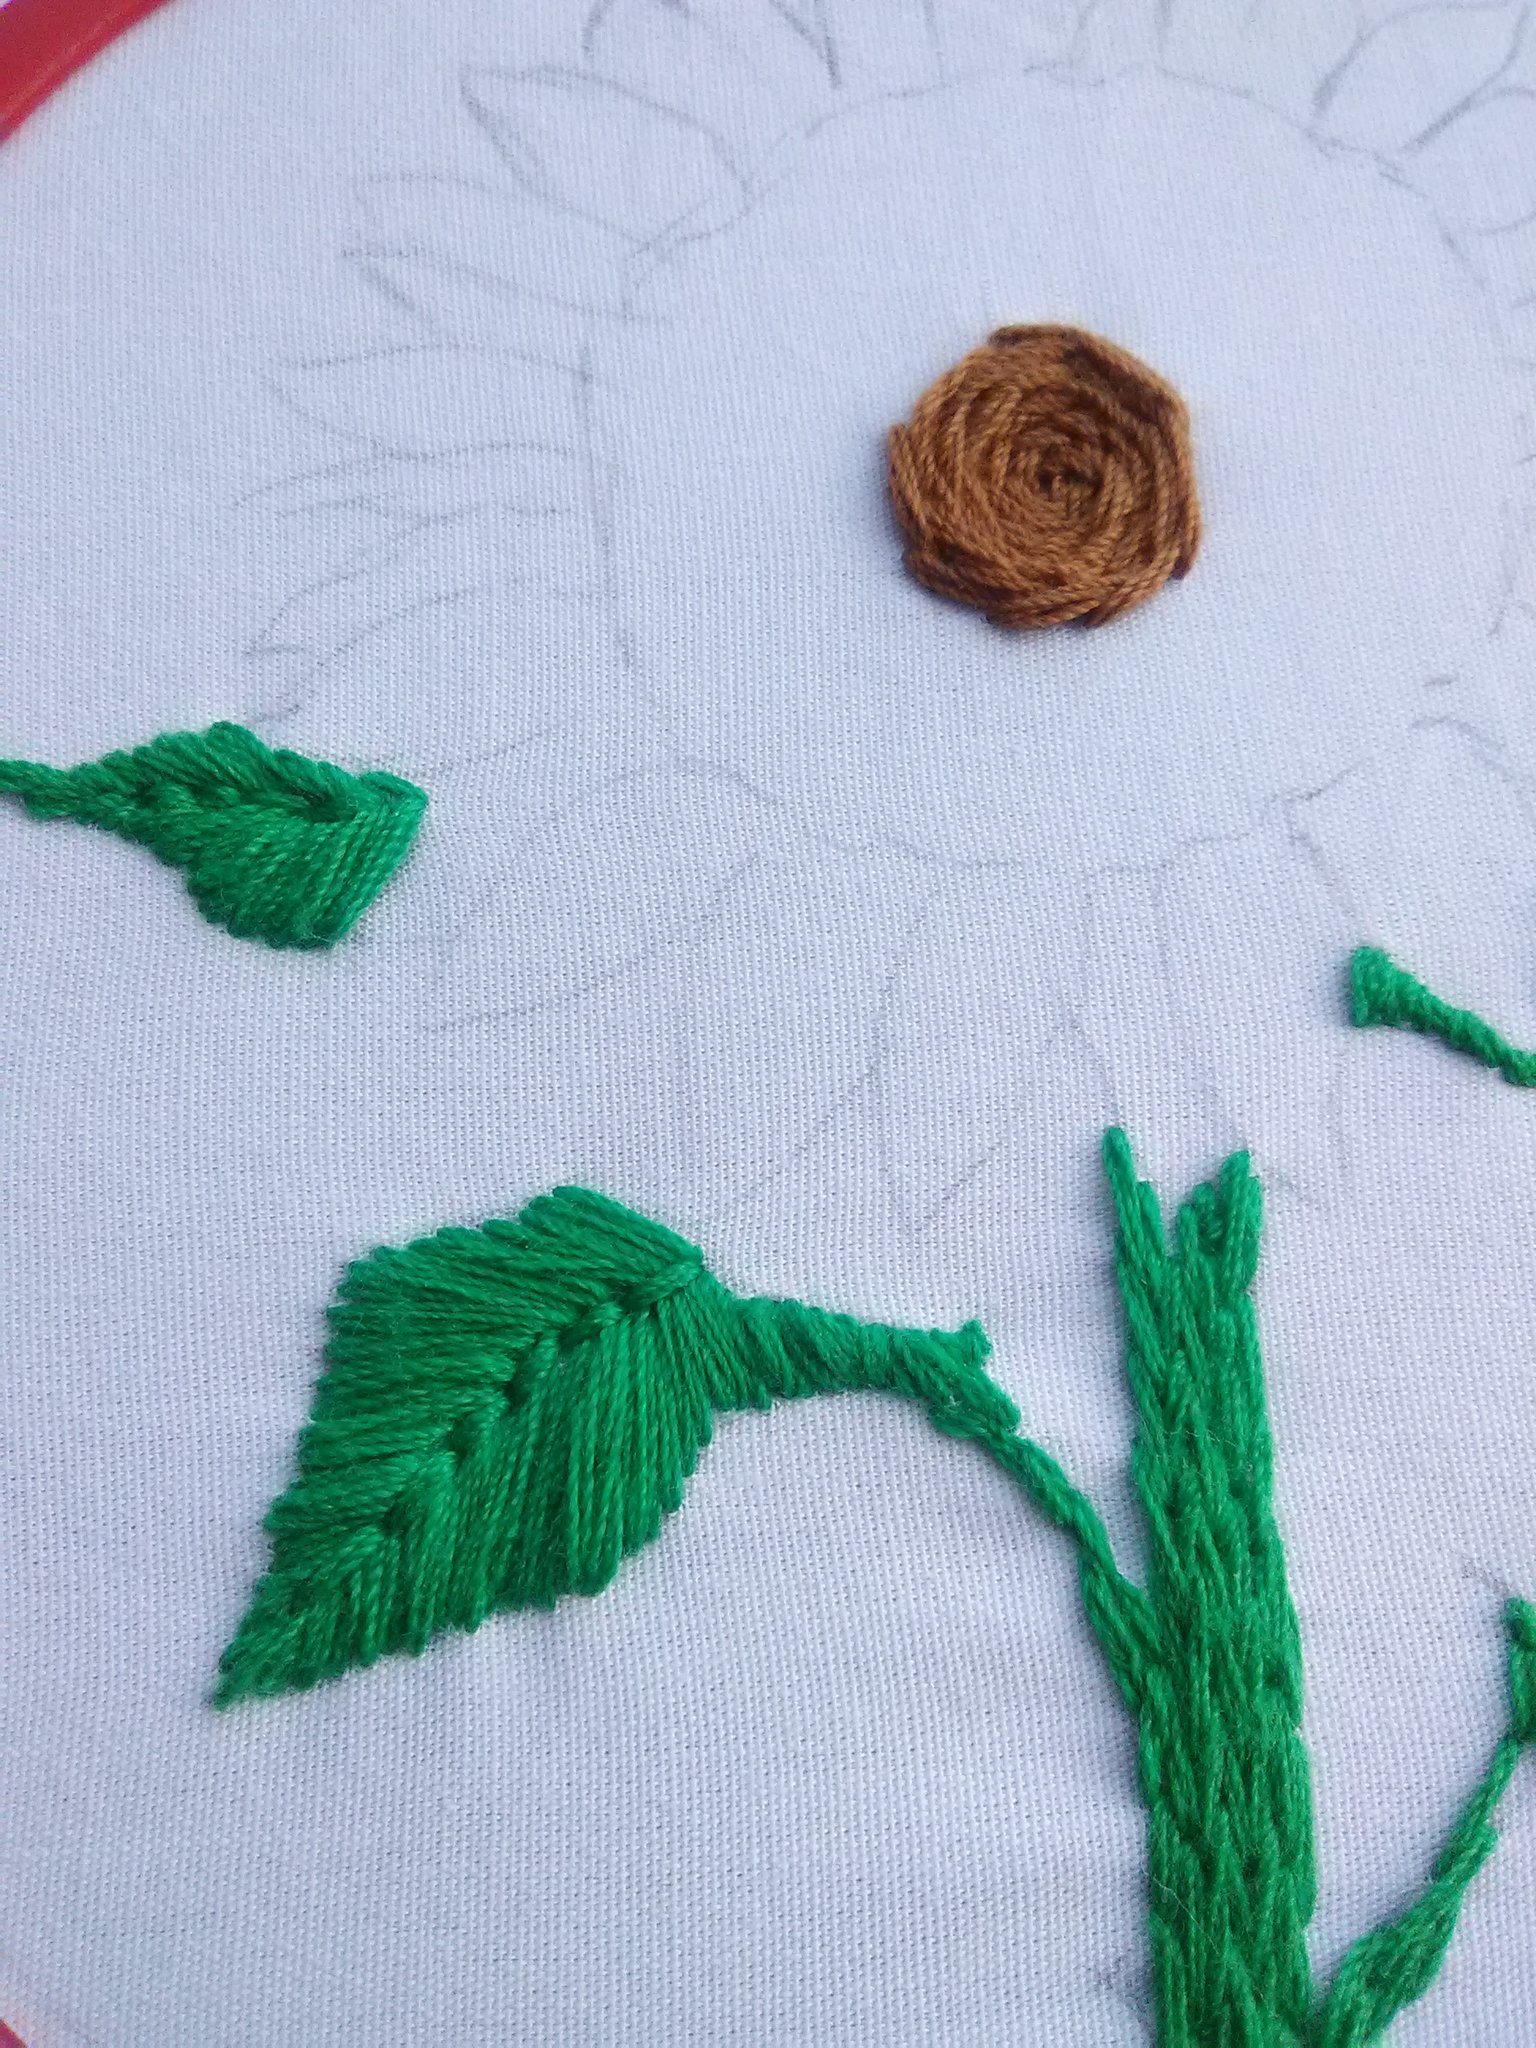 Girasol bordado / Sunflower embroidery — Hive